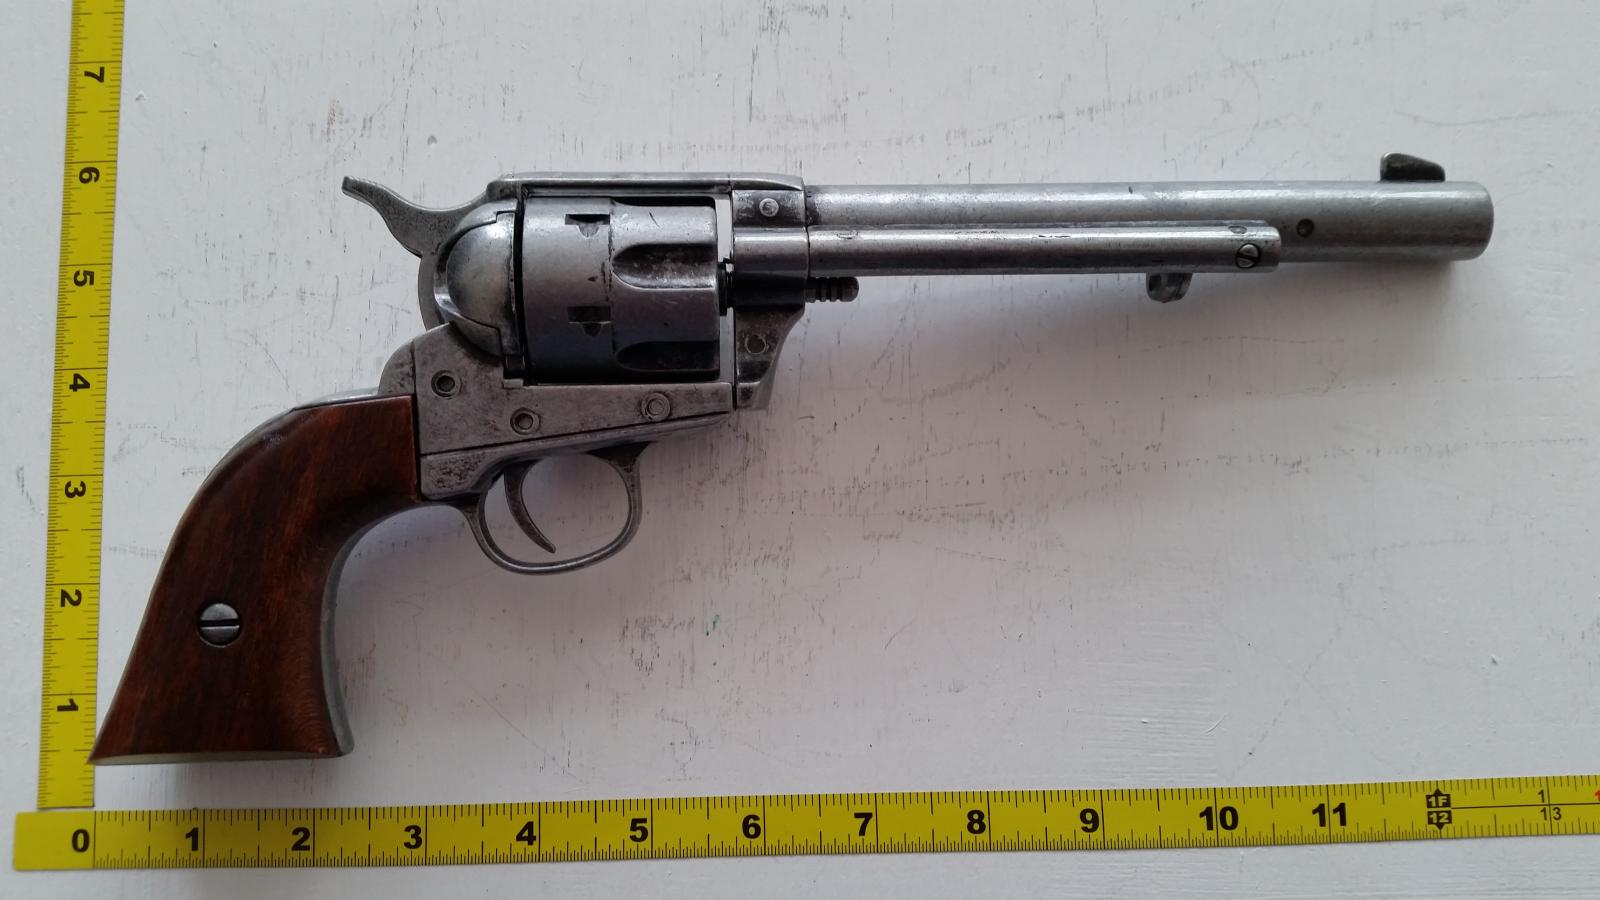 M1873 US Calvary .45 Caliber Single Action Revolver. Non-Firing Replica, Working Action, 7" Barrel. Weight: 2 lbs